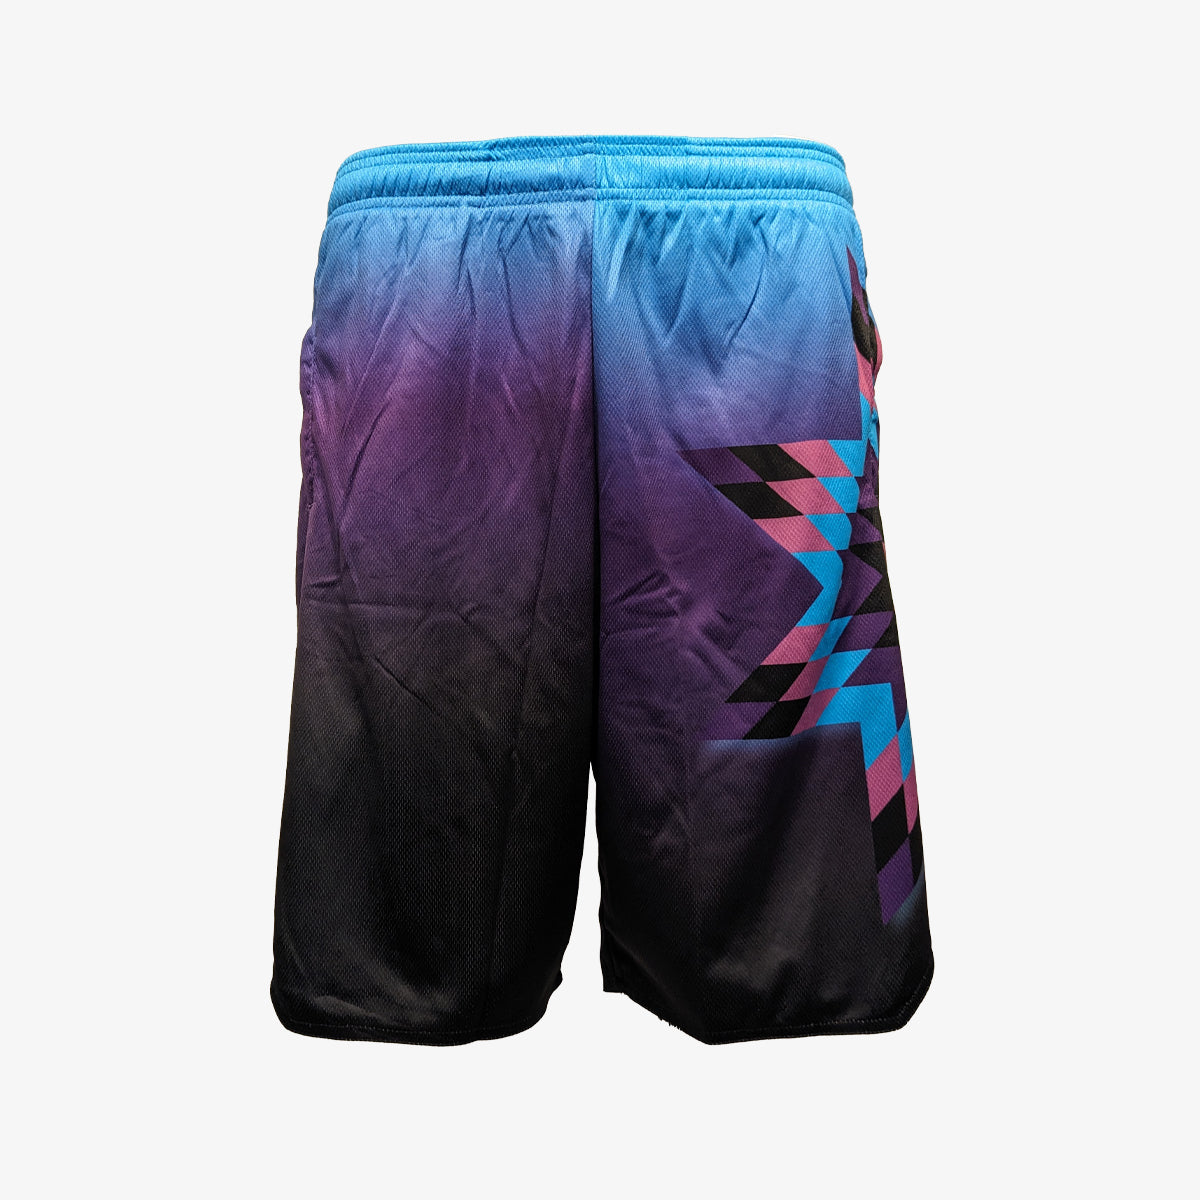 Purple Basketball Shorts